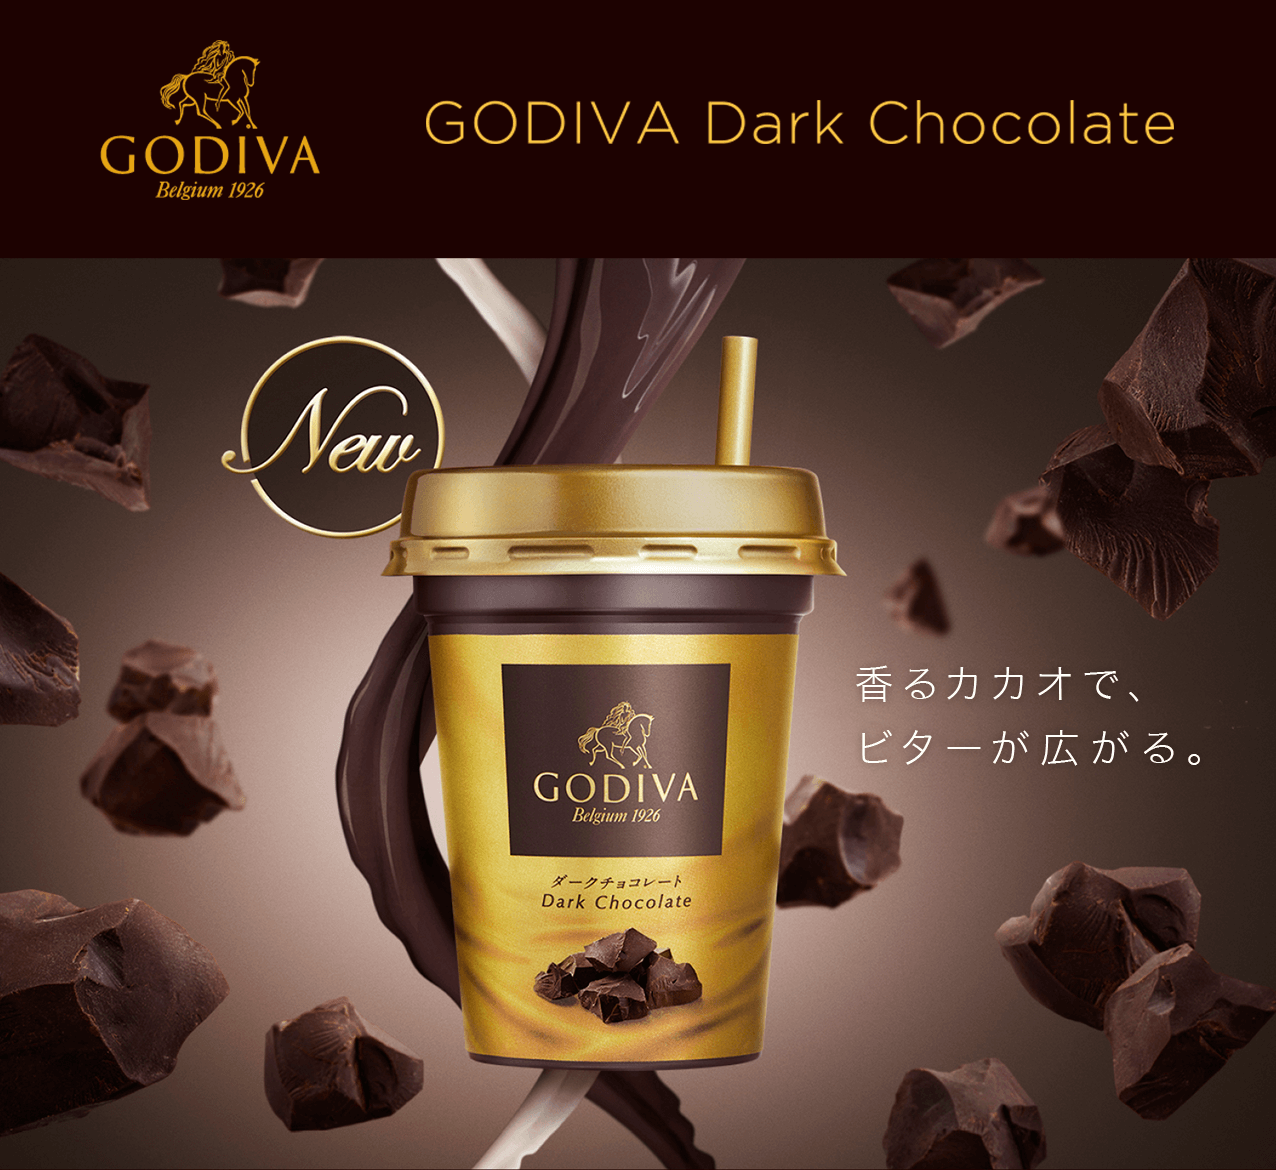 GODIVA Dark Chocolate